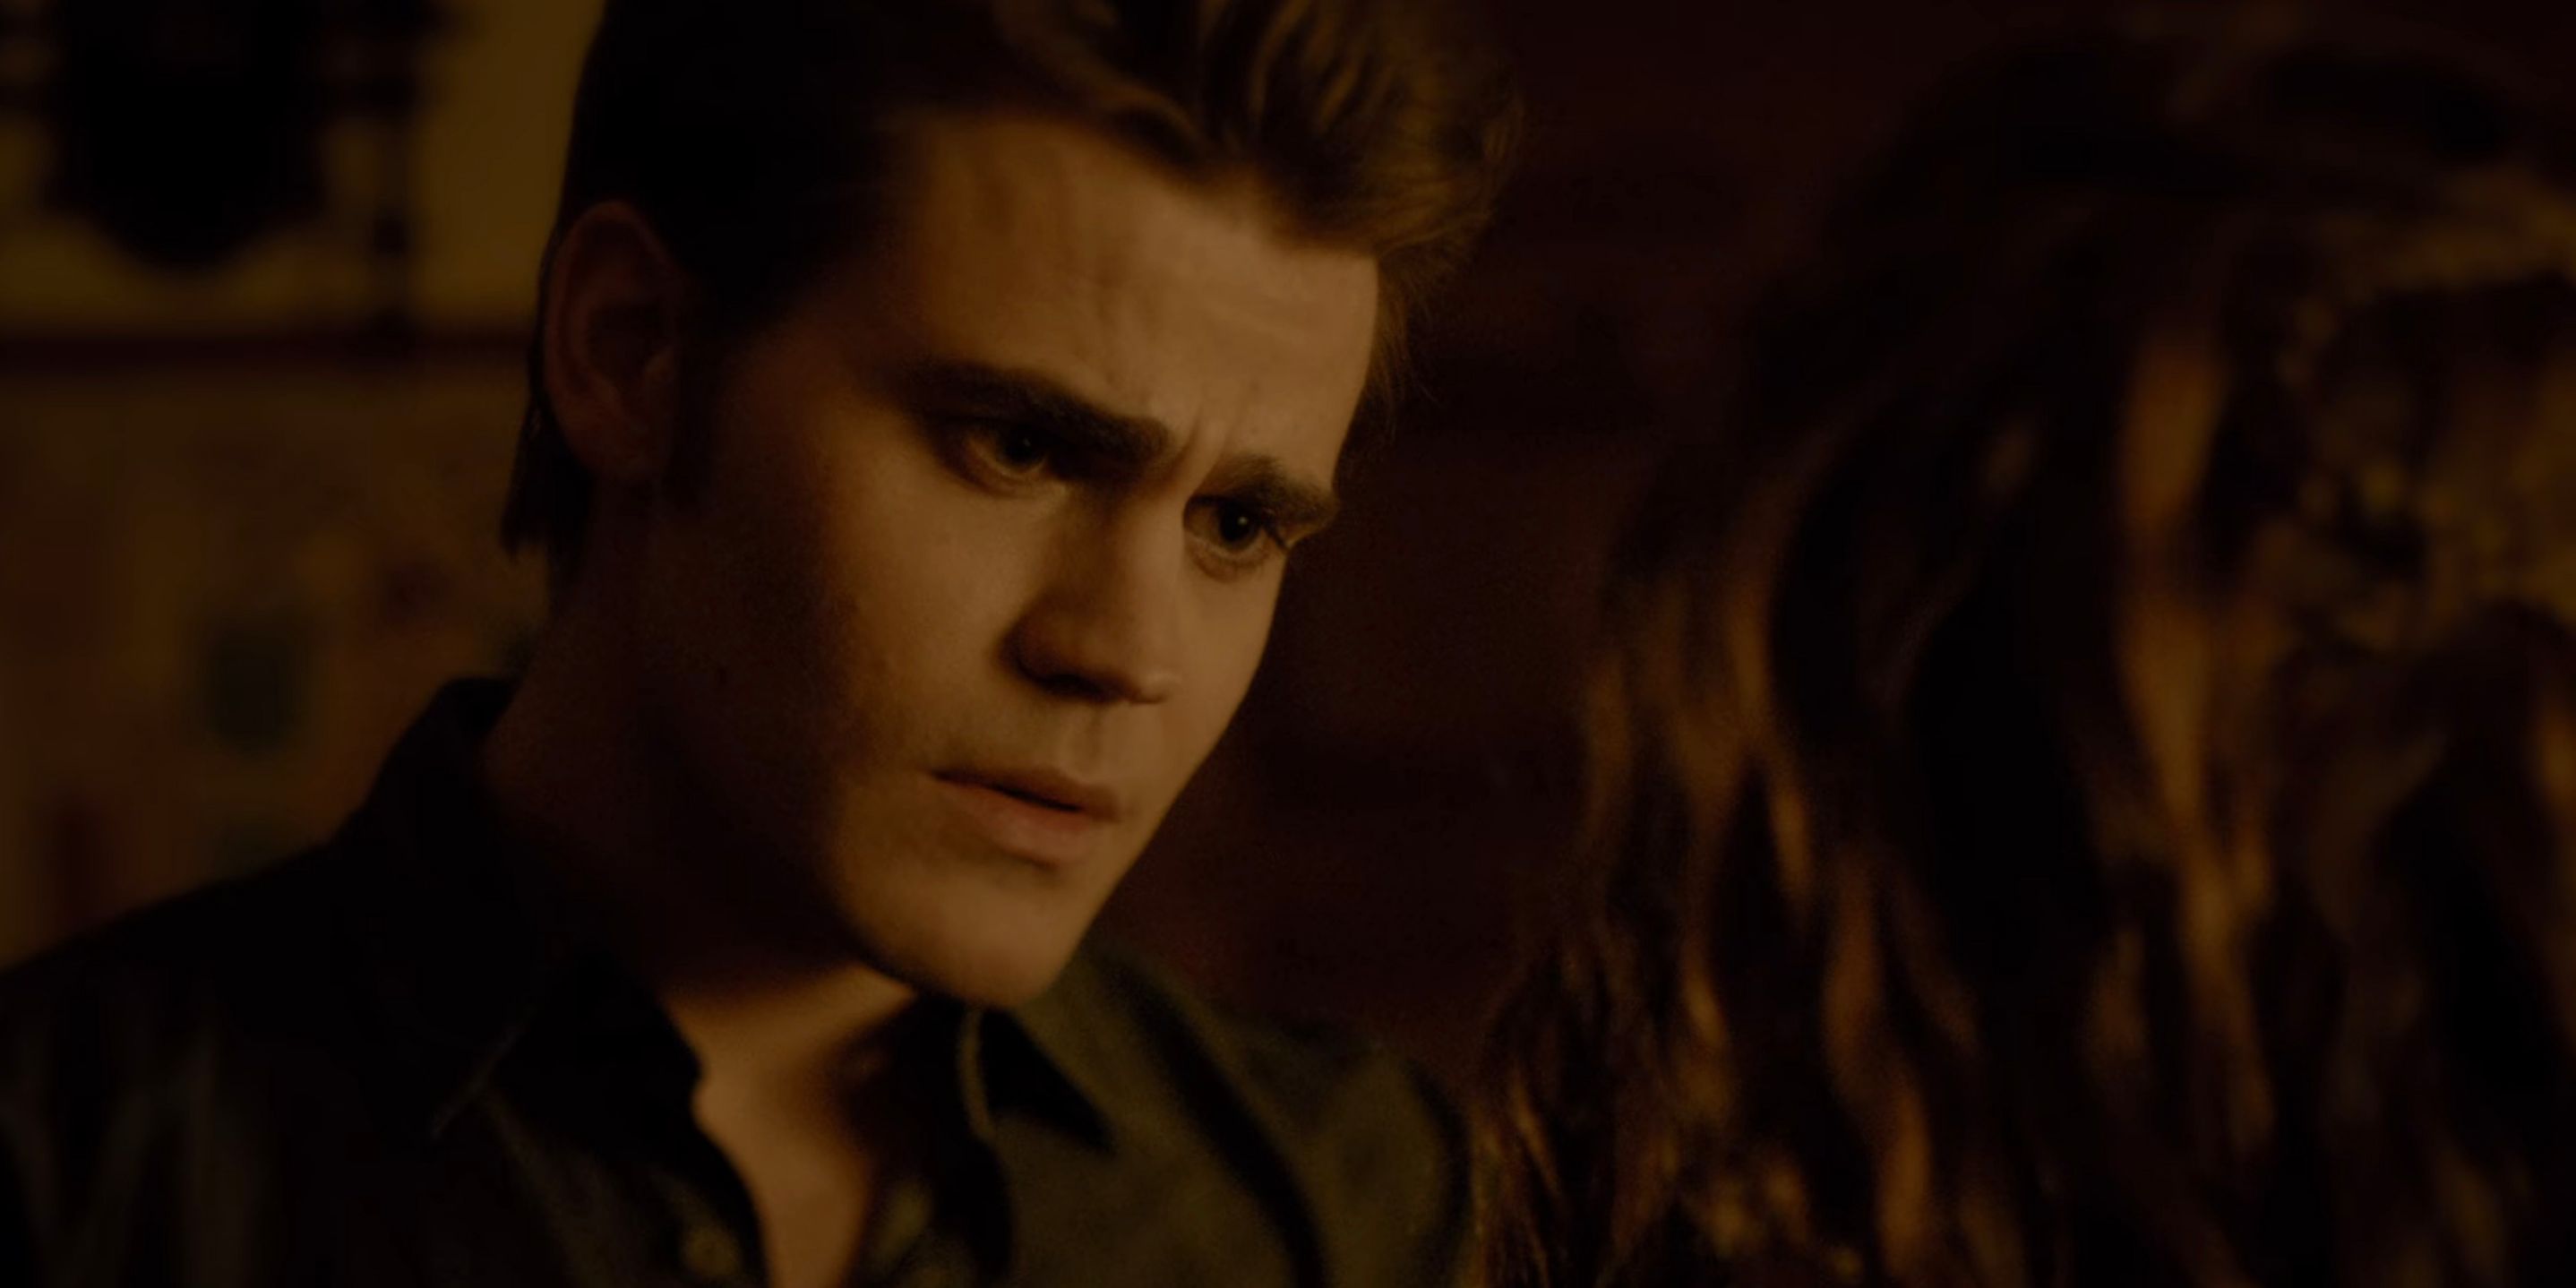 Stefan changes Katherine's worst memory in The Vampire Diaries.